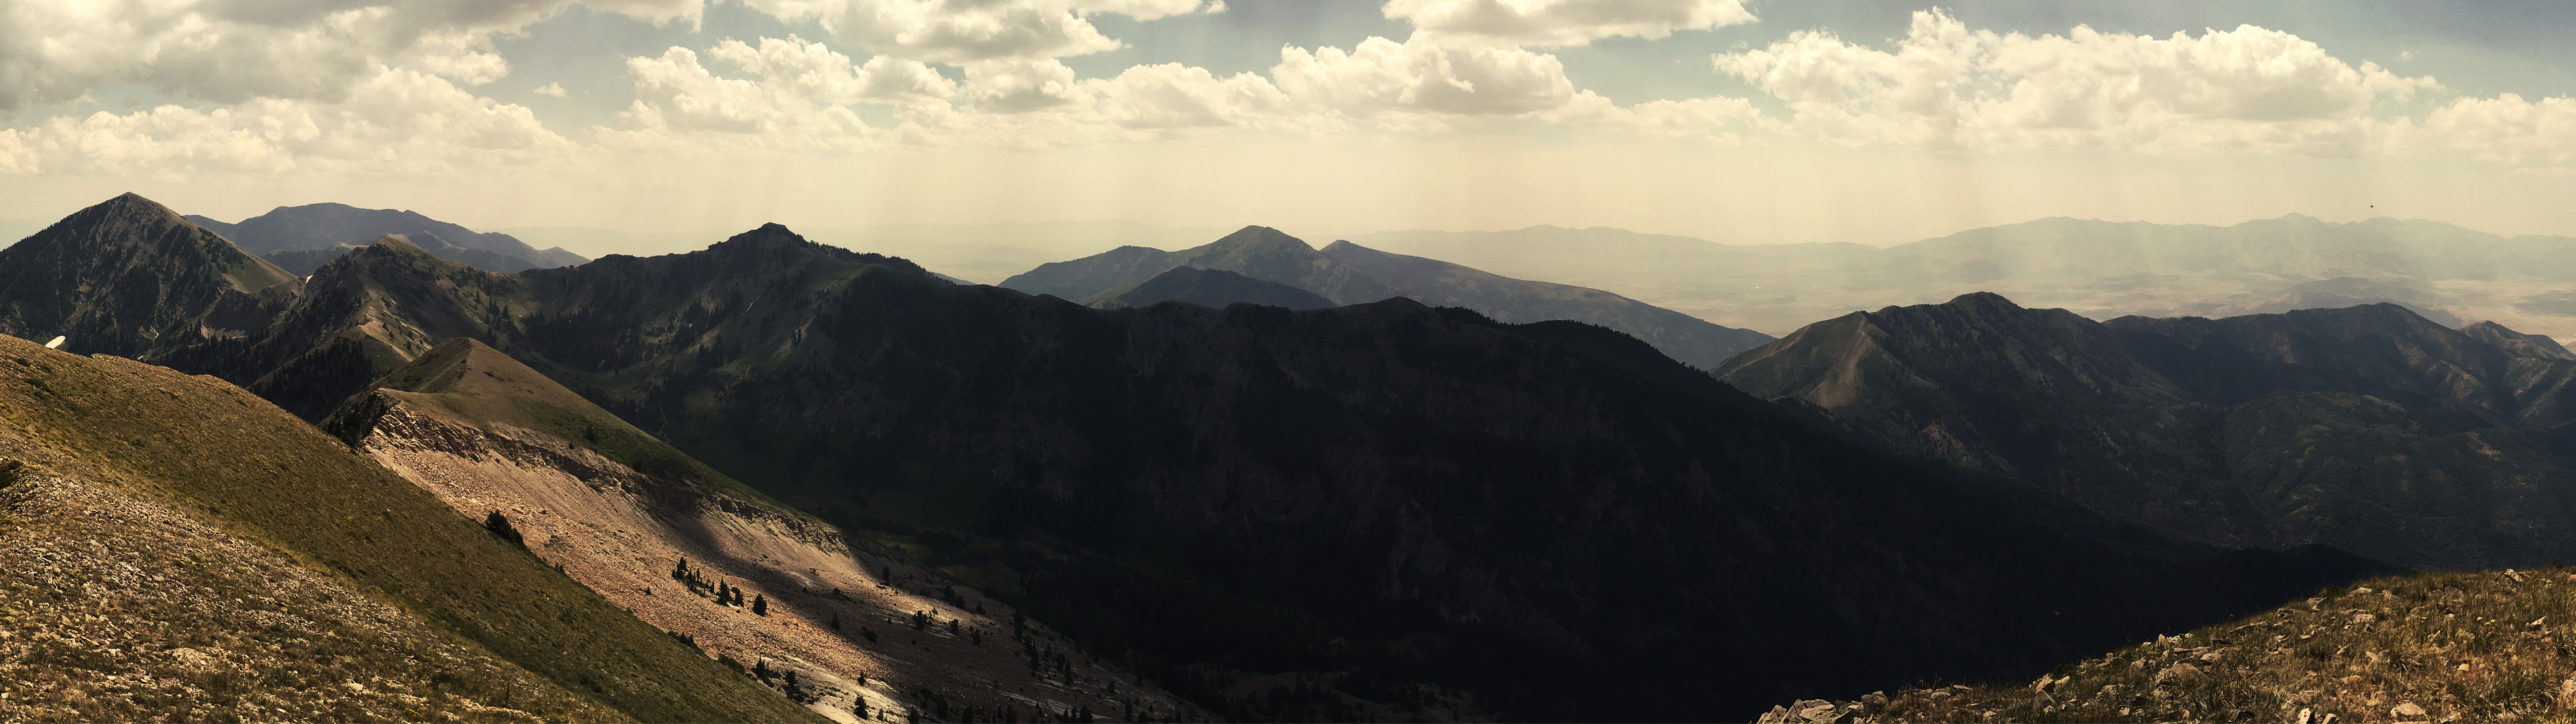 General 3840x1080 mountains landscape dual monitors Utah USA nature